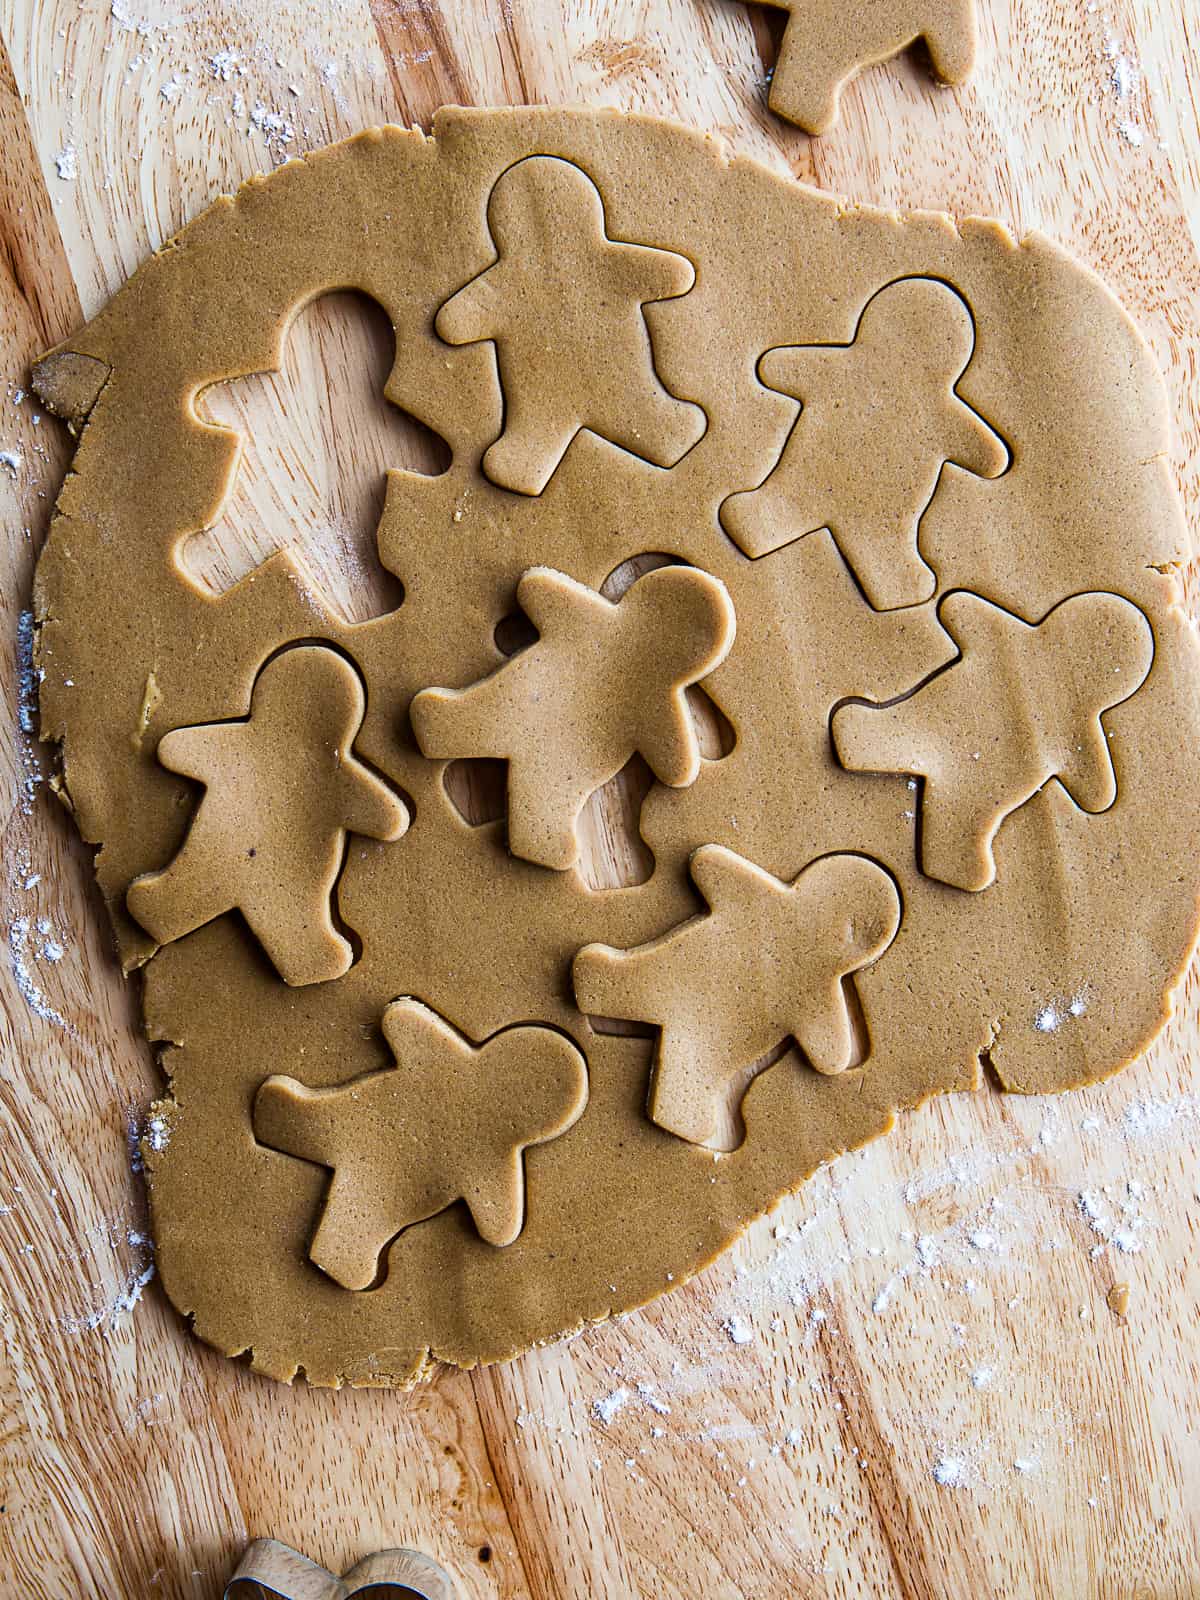 Gluten free gingerbread dough cut into gingerbread men shapes.